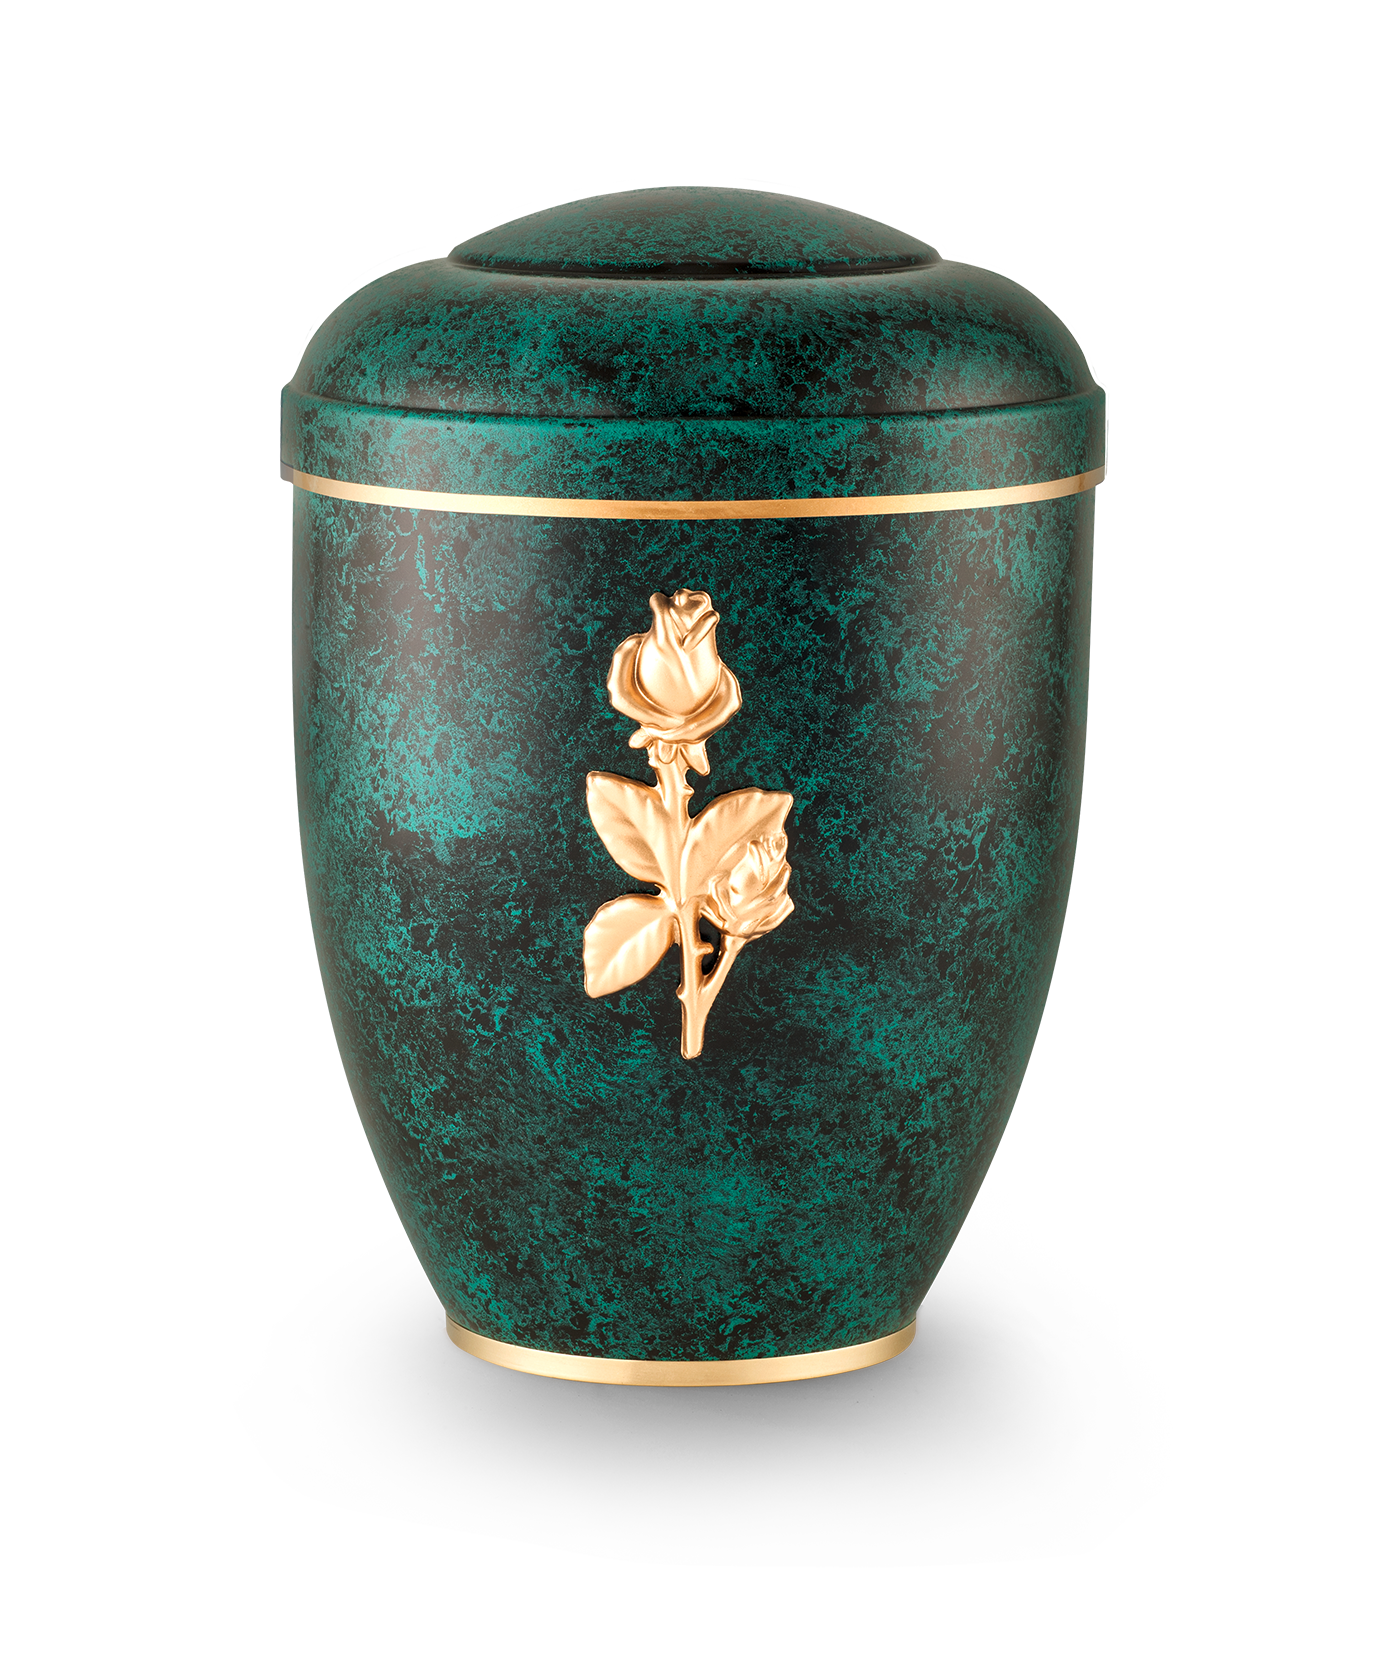 Völsing urn Edition Rustica hand-colored